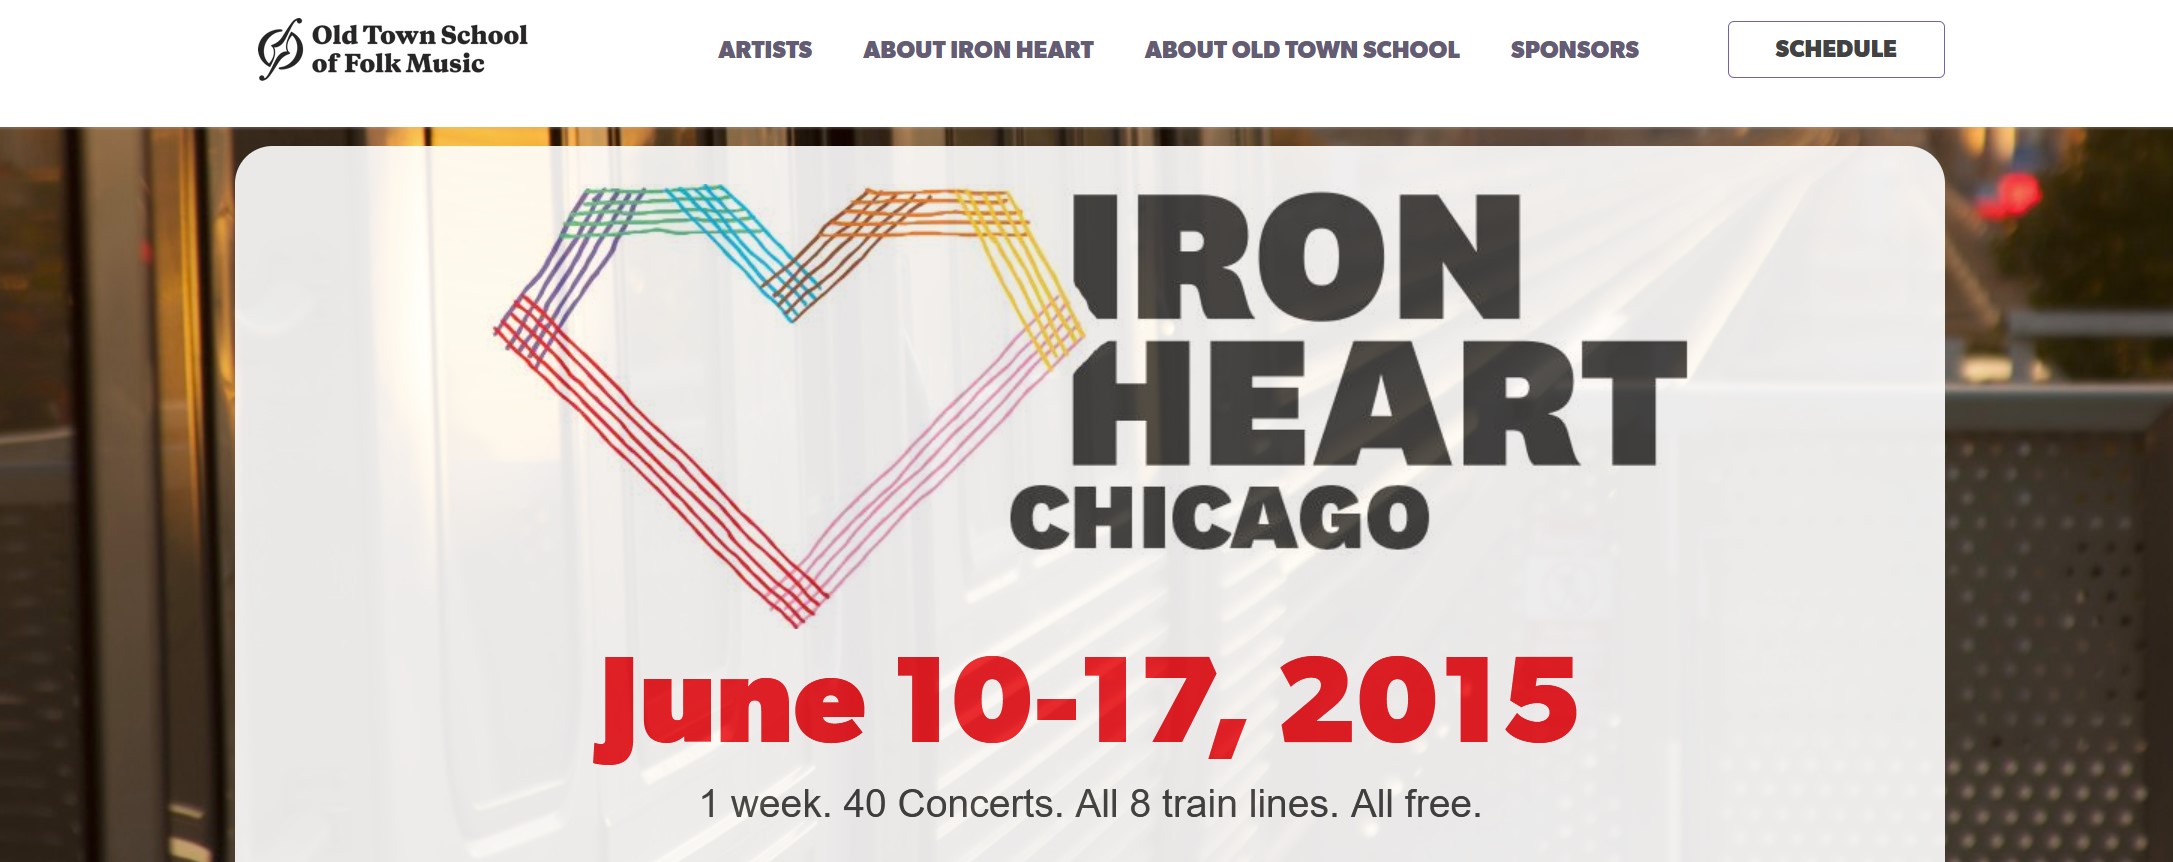 Iron Heart Chicago